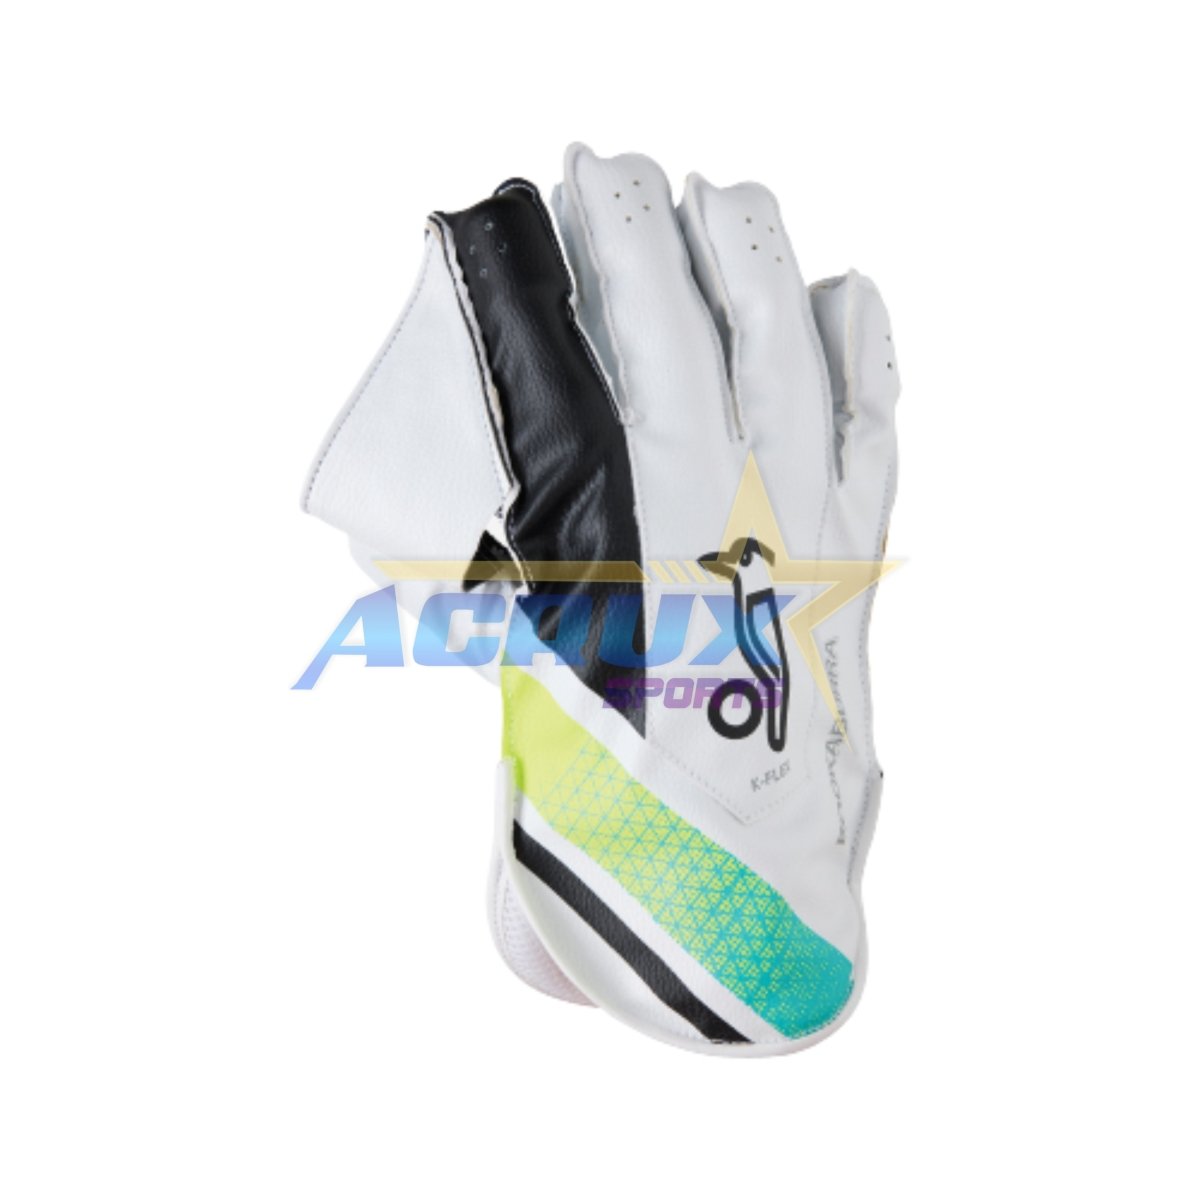 Kookaburra Rapid Pro 3.0 Cricket Wicket Keeping Gloves.